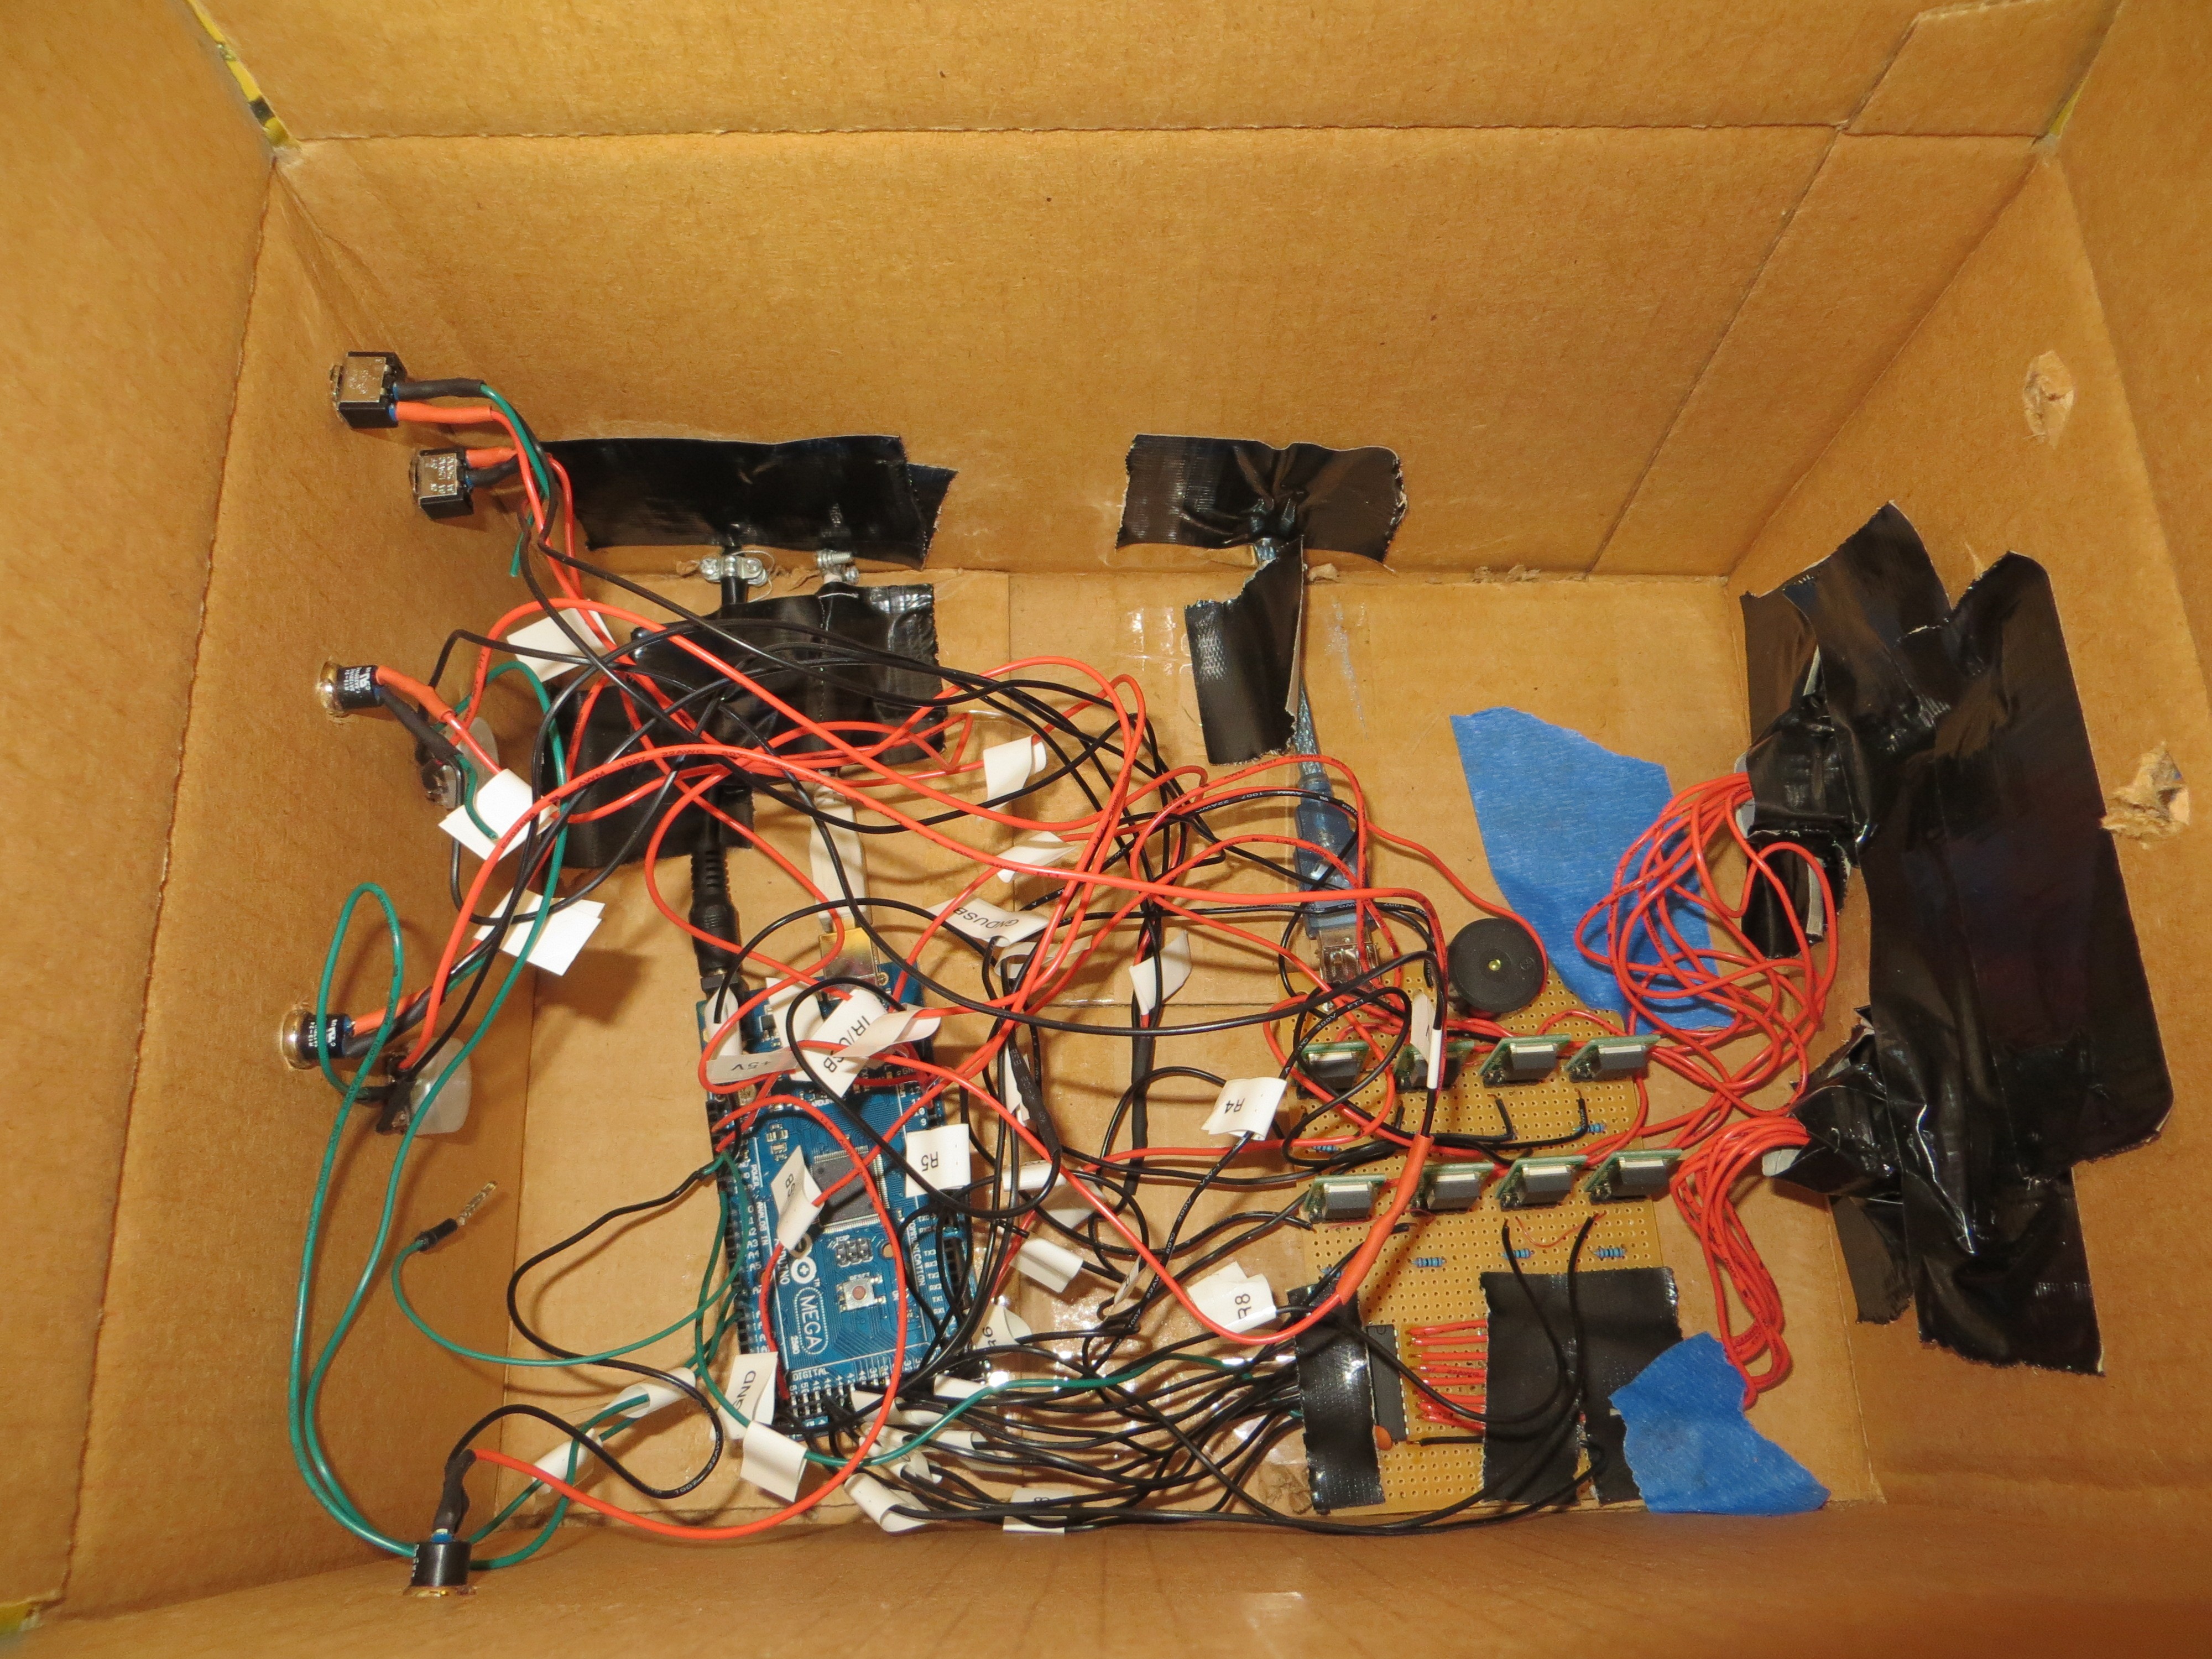 original controller box from 2013